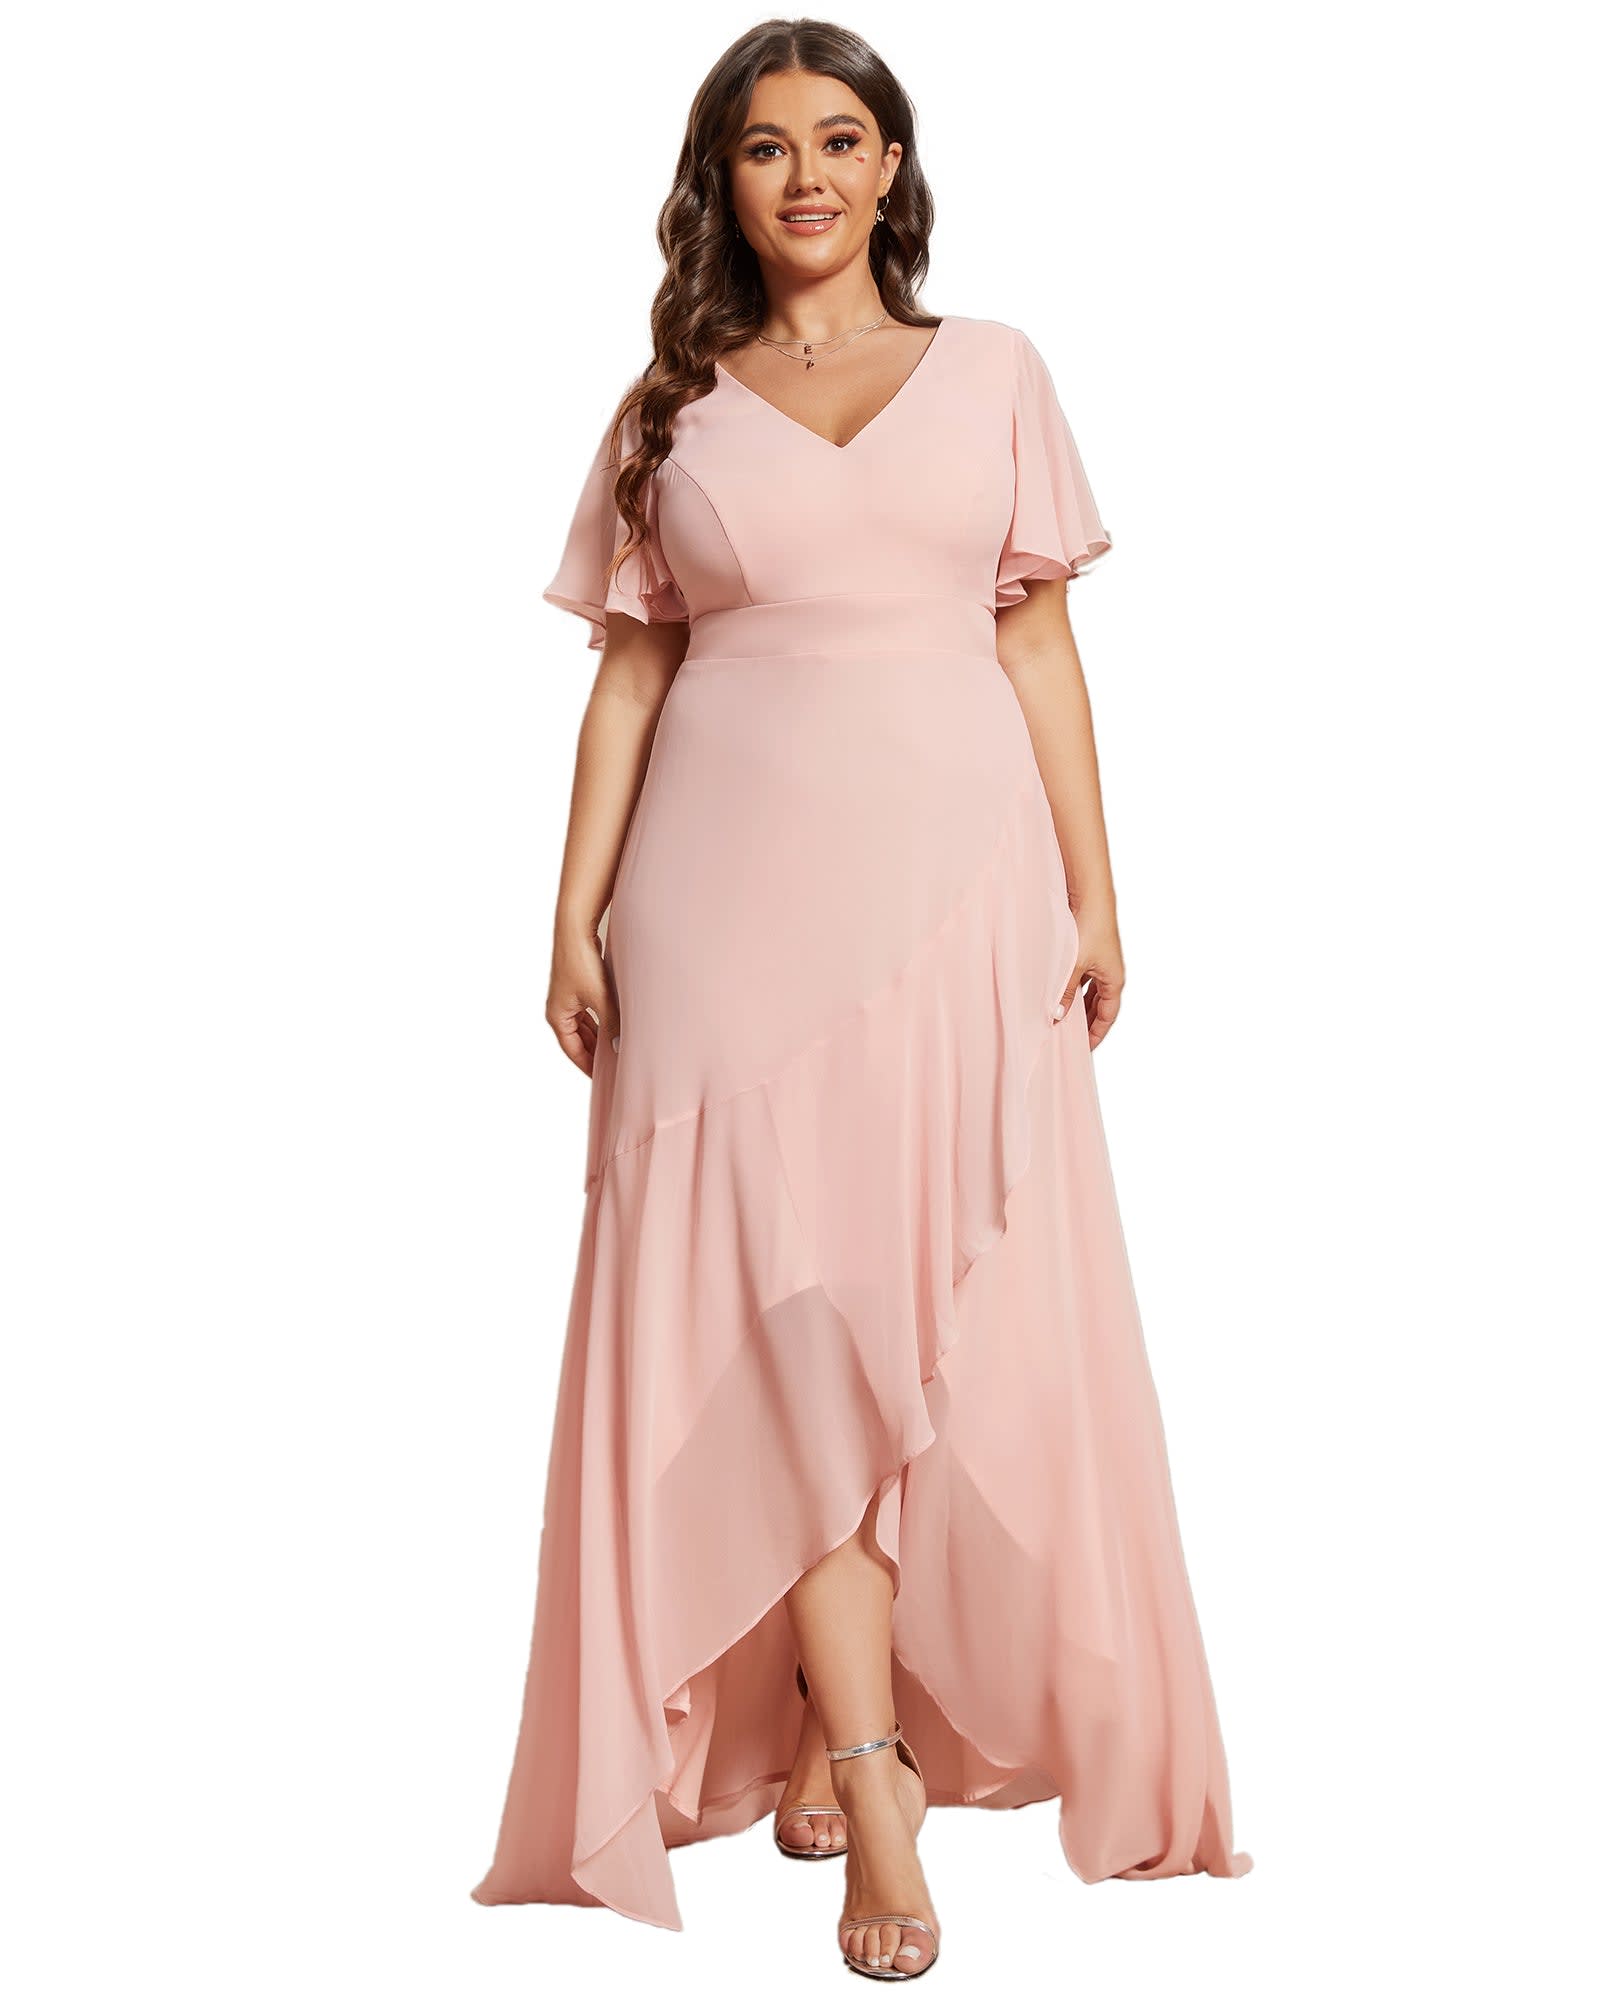 Charming Chiffon Bridesmaid Dress with Lotus Leaf Hemline | Pink